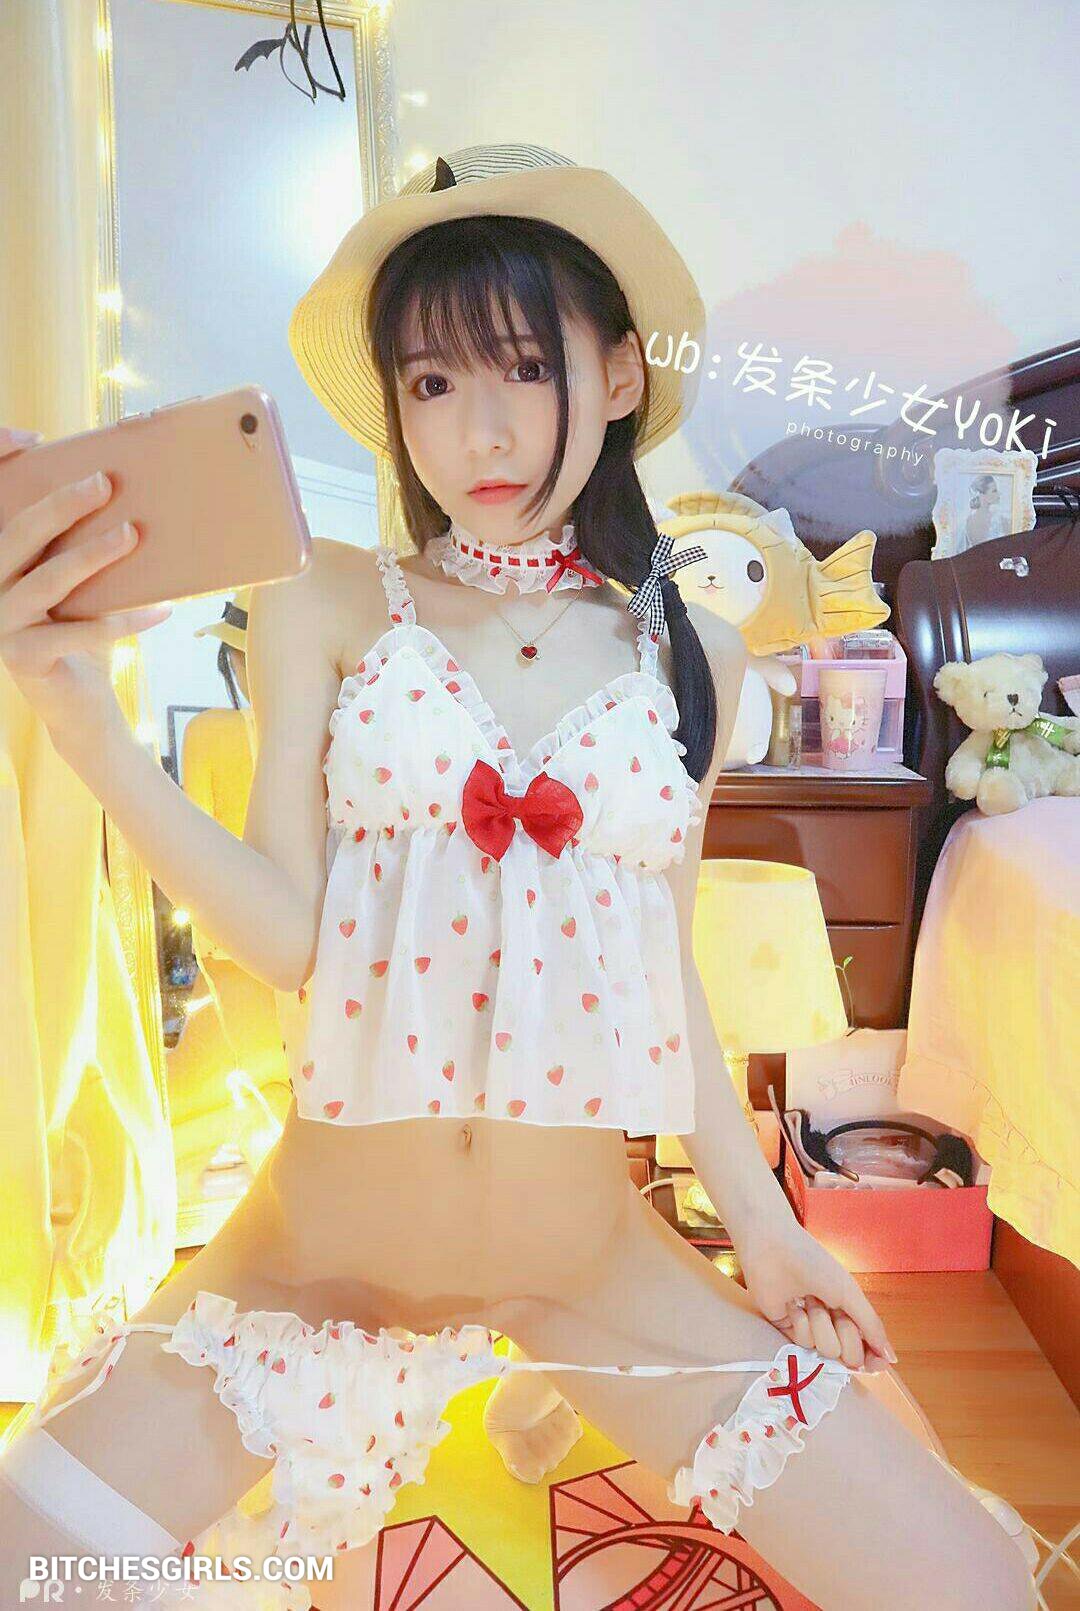 FATIAO_Liii Asian Nudes - Japanese Fantia Leaked Pussy Pics